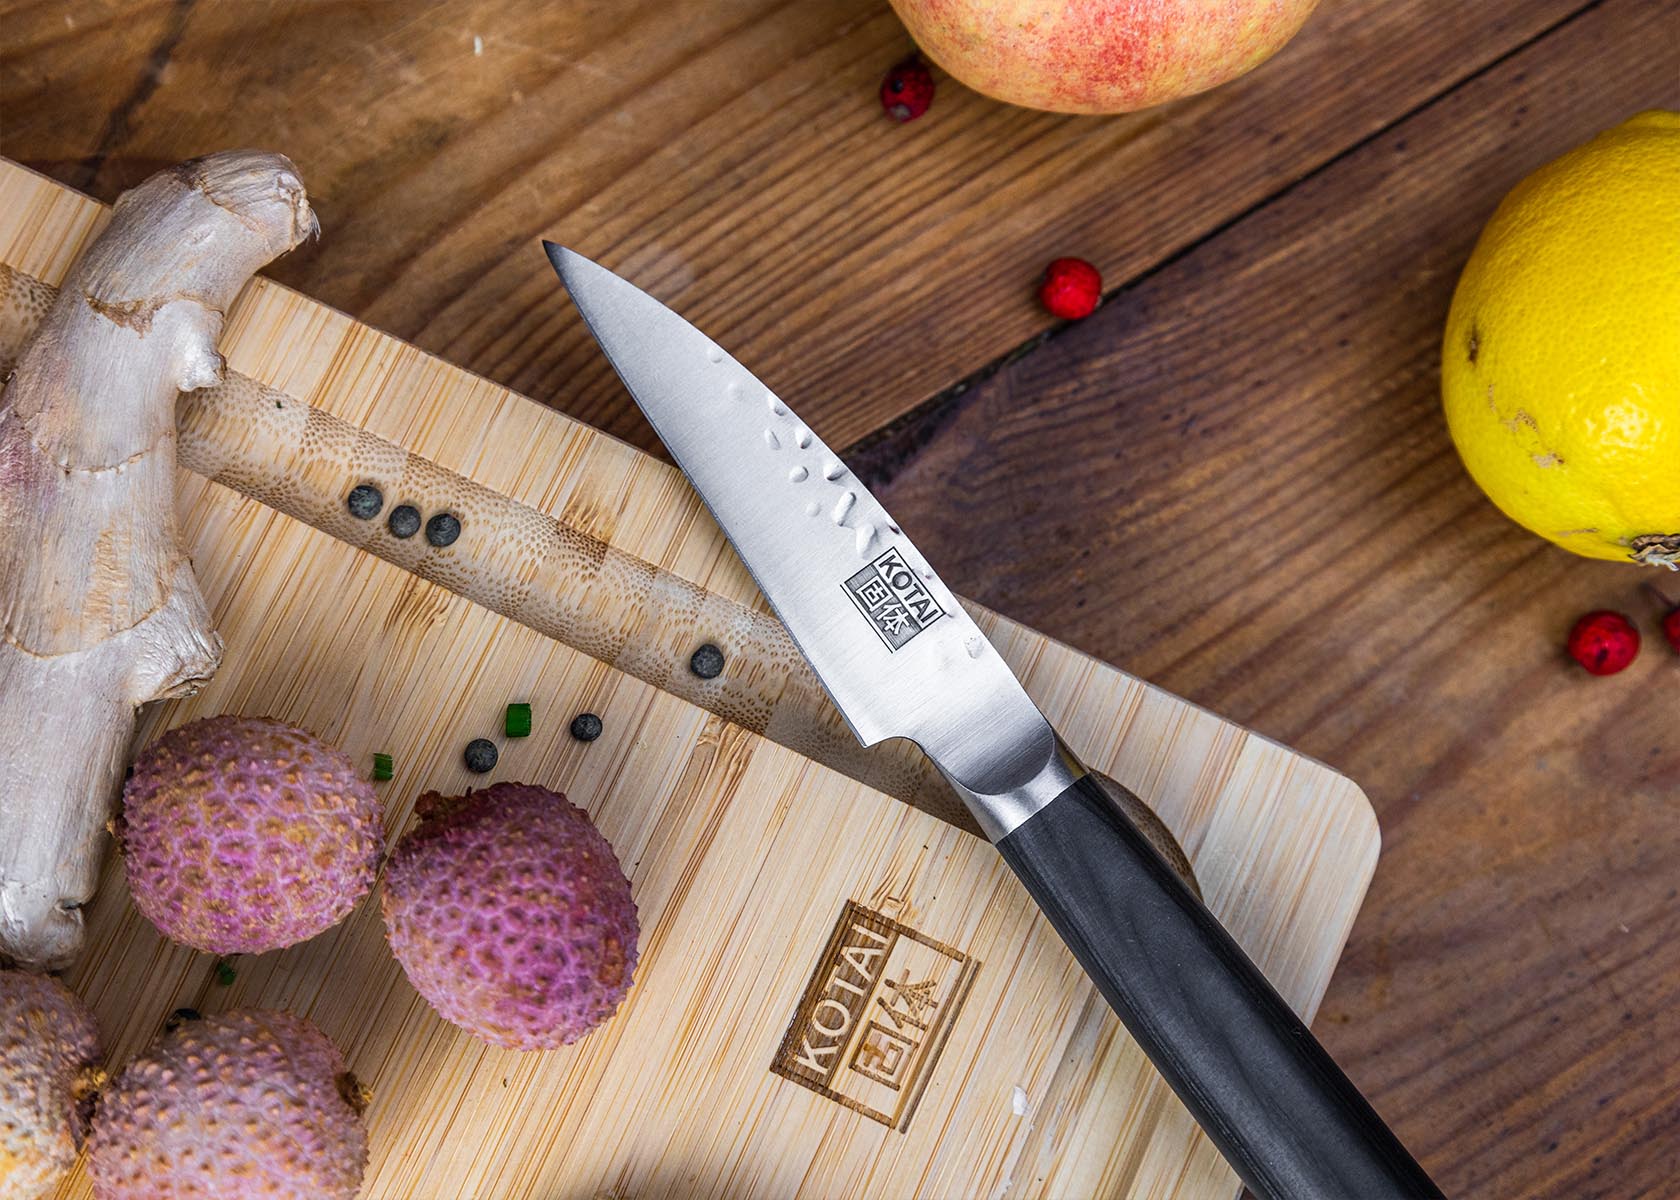 KOTAI Paring knife 90 mm blade and pakkawood handle on KOTAI bamboo cutting board with fruits.